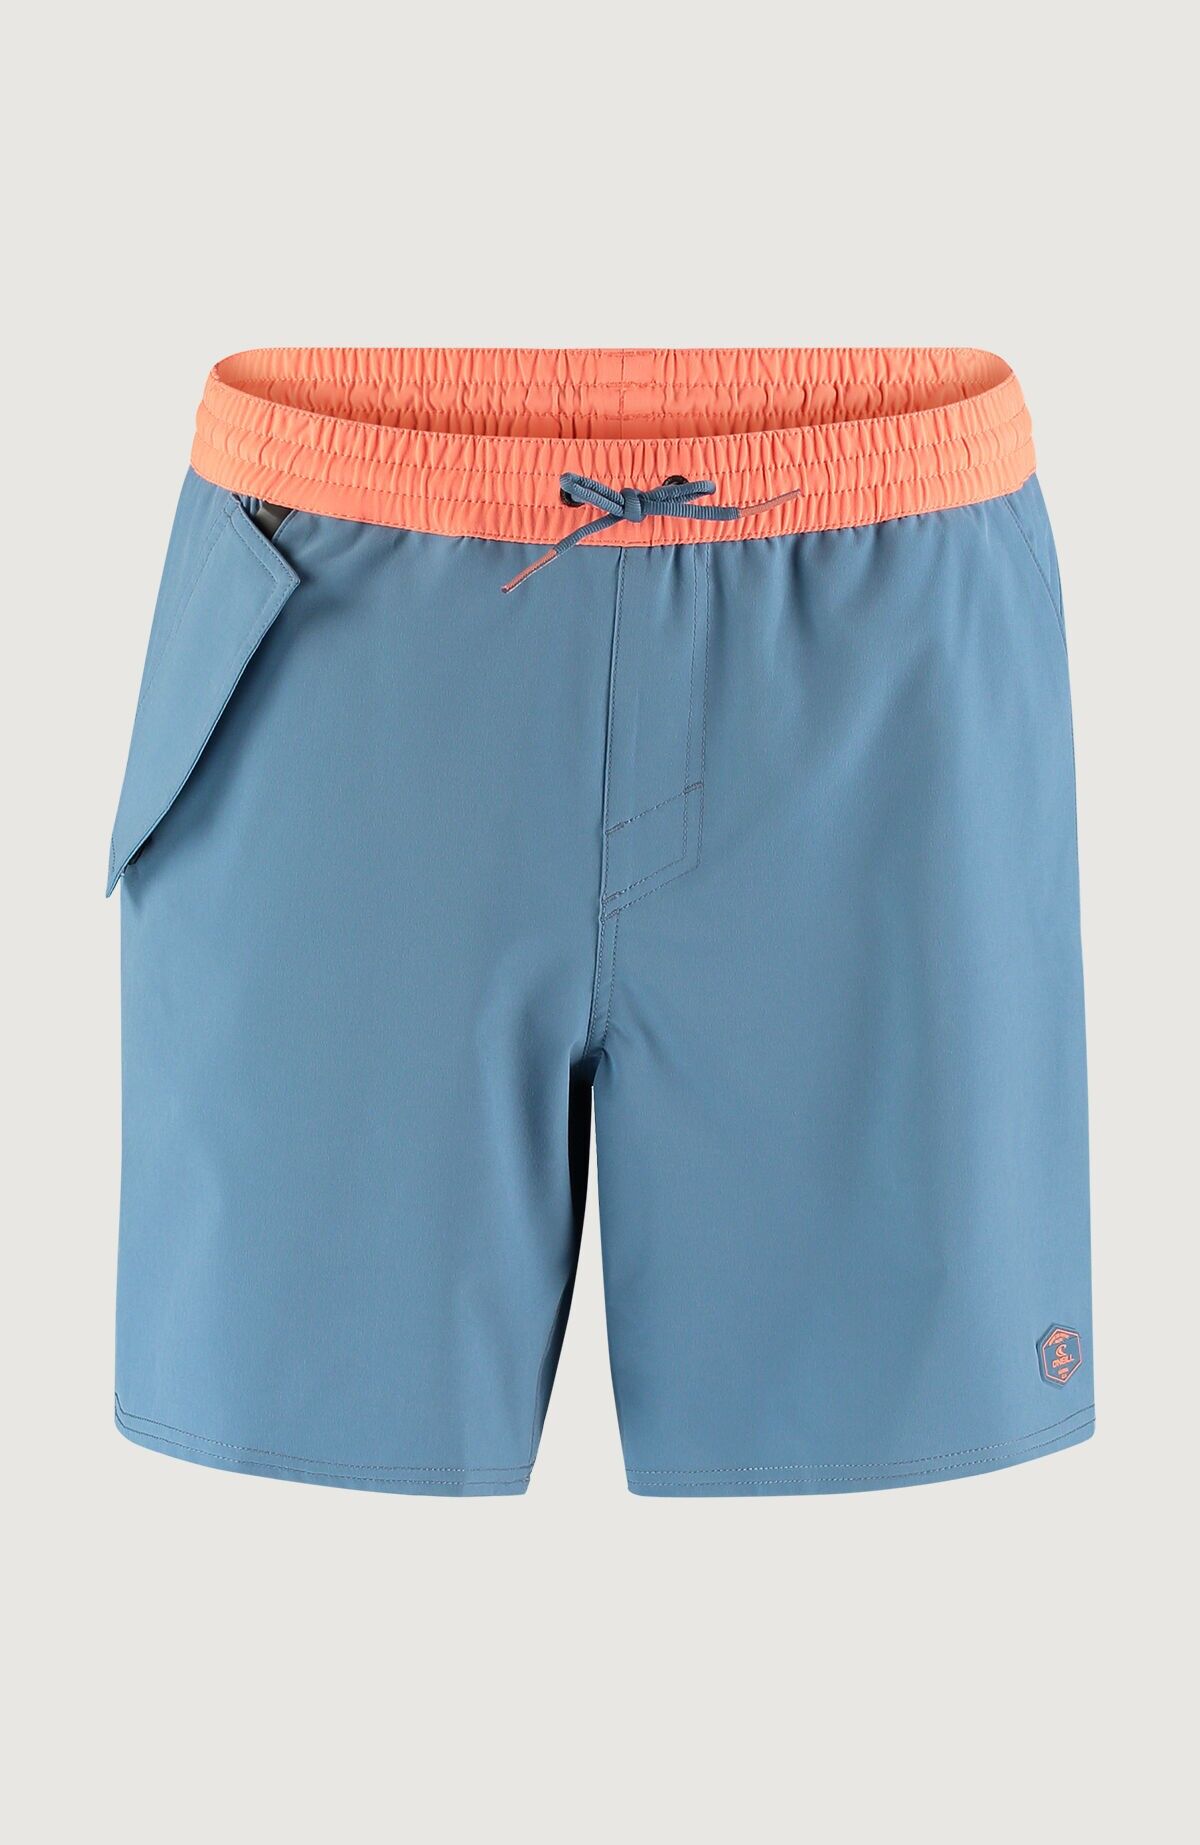 O'Neill Wp-Pocket Shorts - Pantaloncini da bagno - Uomo